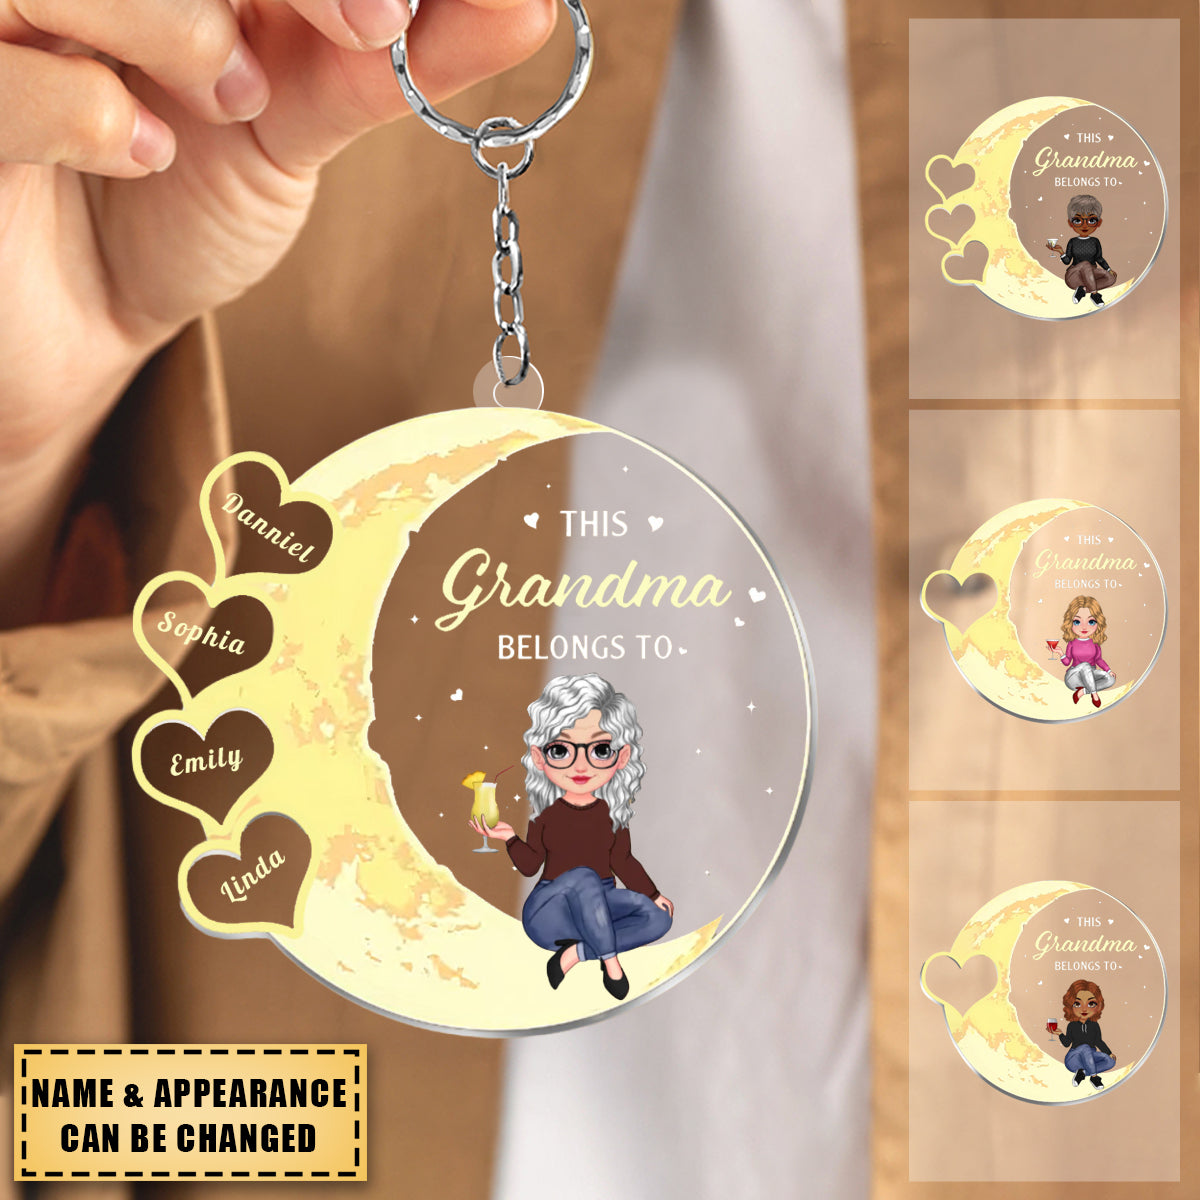 This Grandma belongs to personalized acrylic keychain